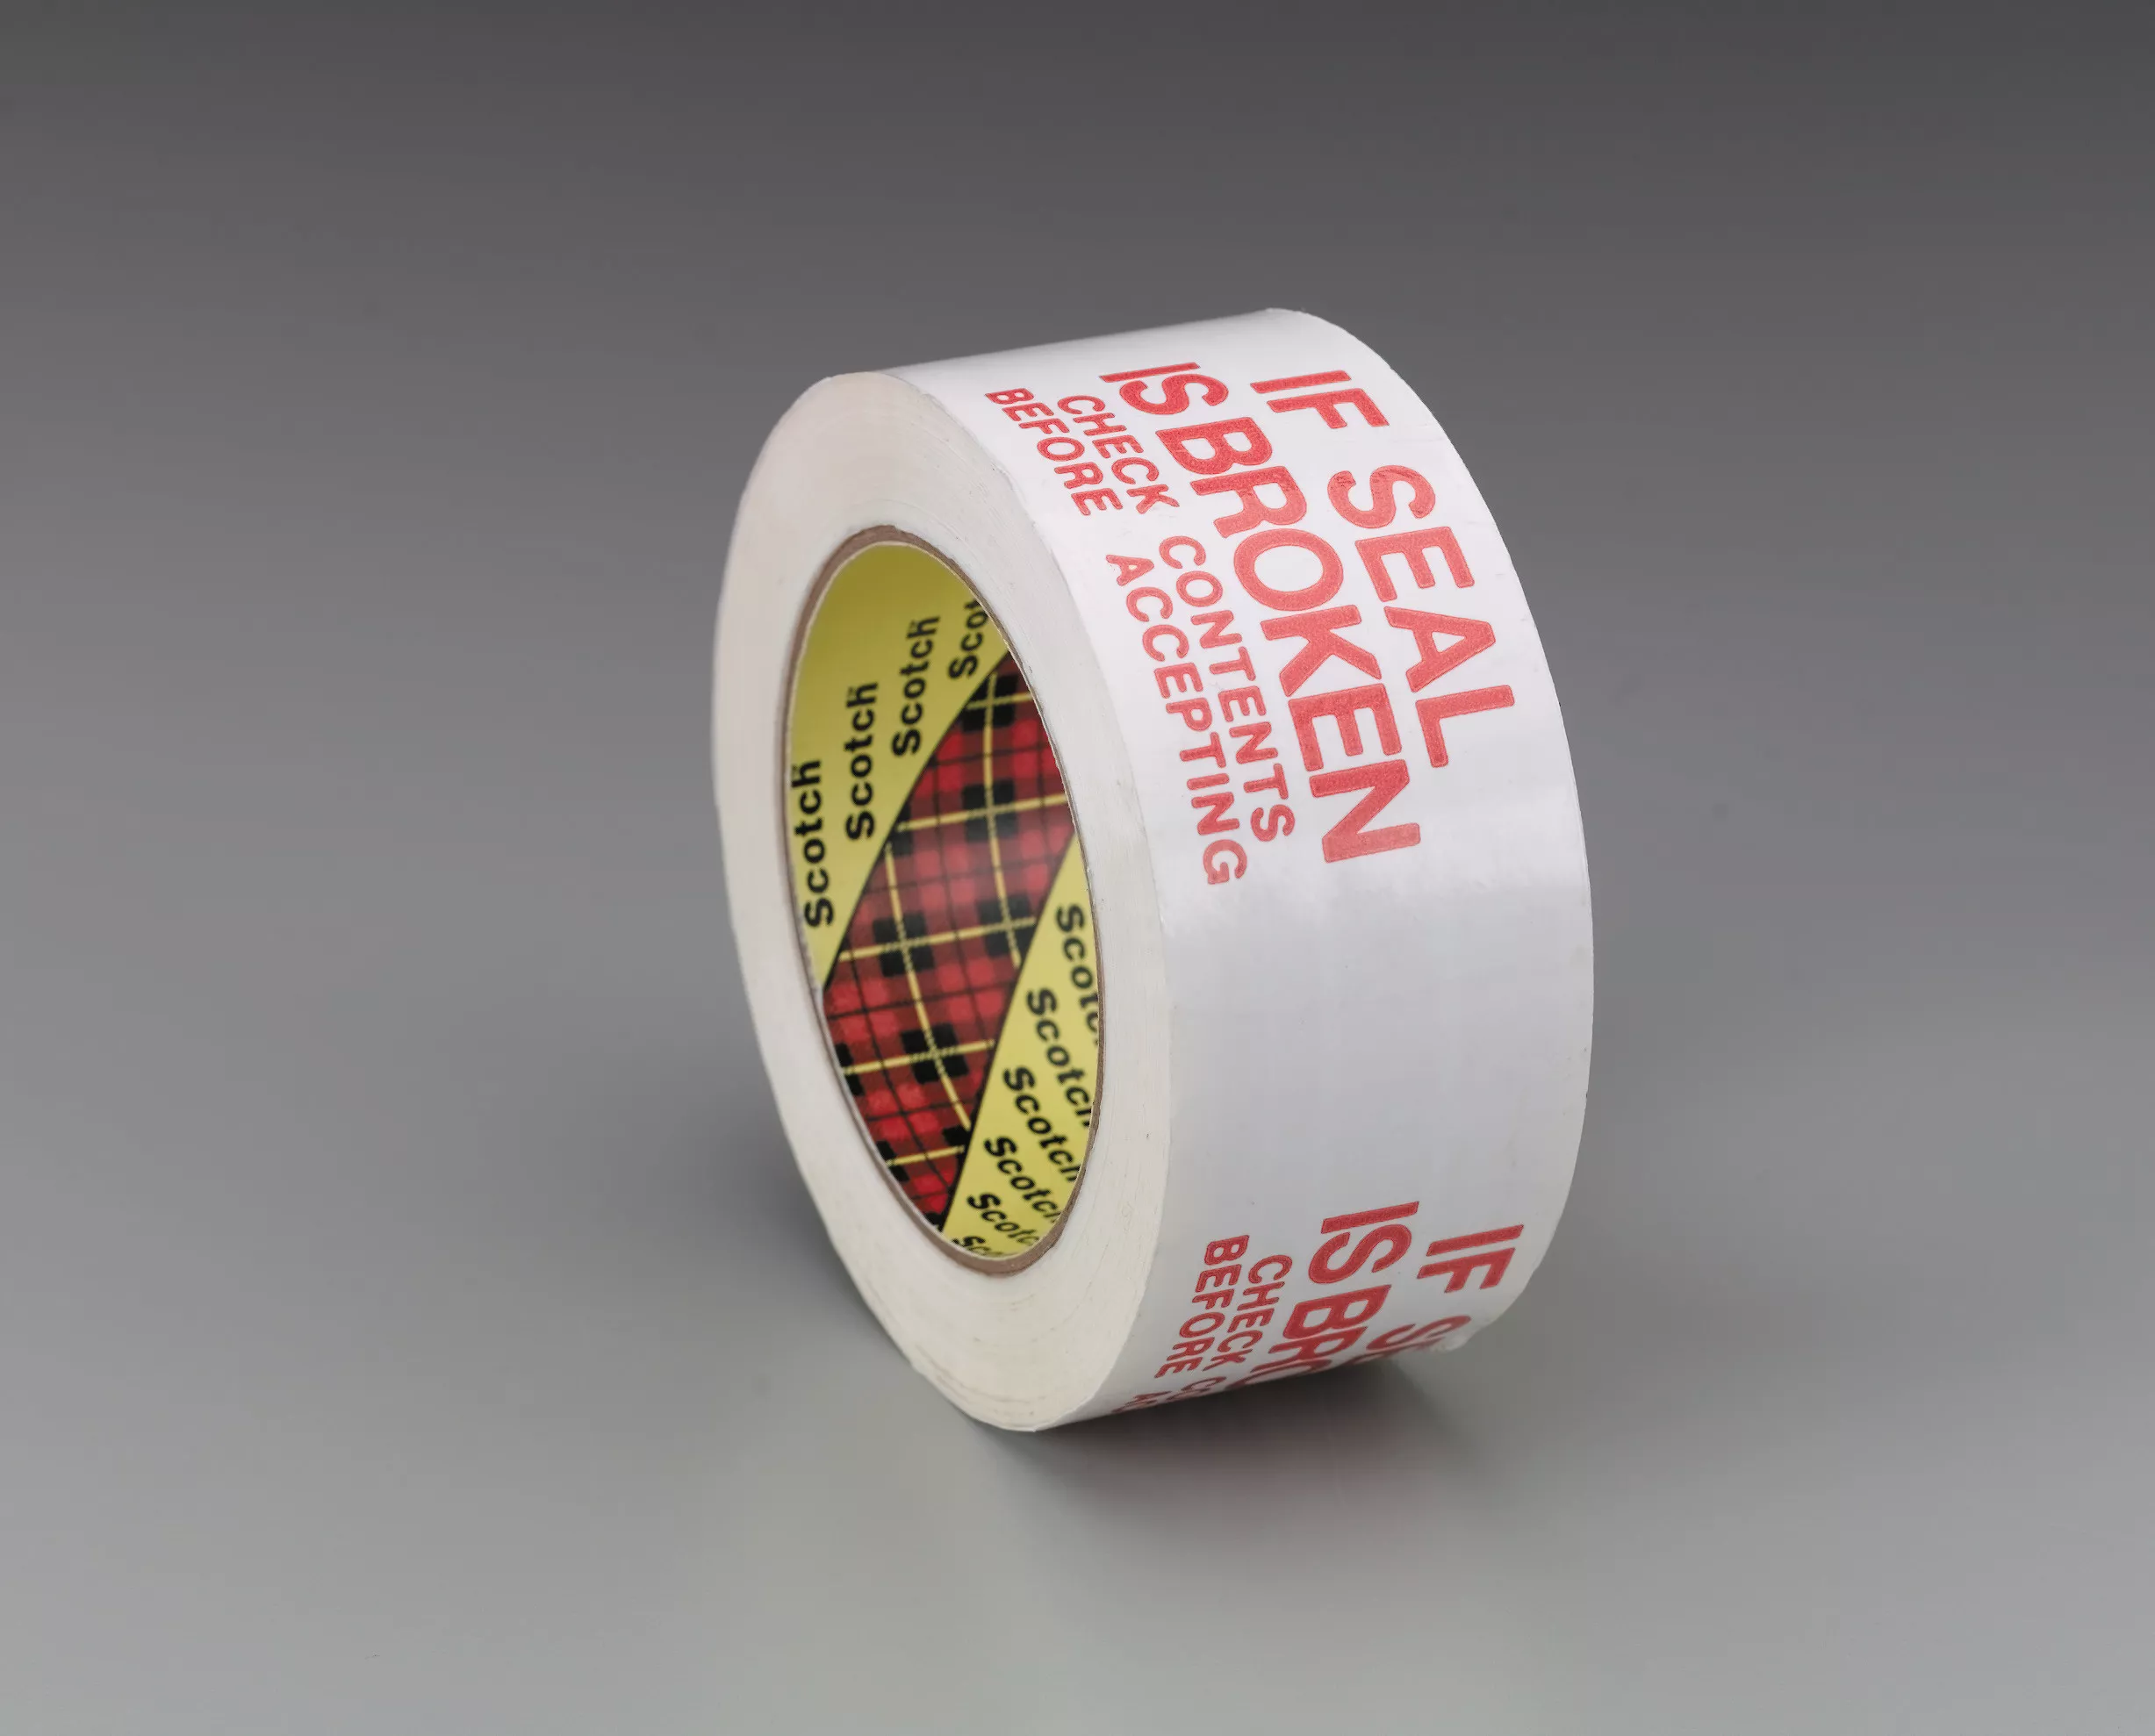 Scotch® Printed Message Box Sealing Tape 3771, White, 48 mm x 100 m,
36/Case